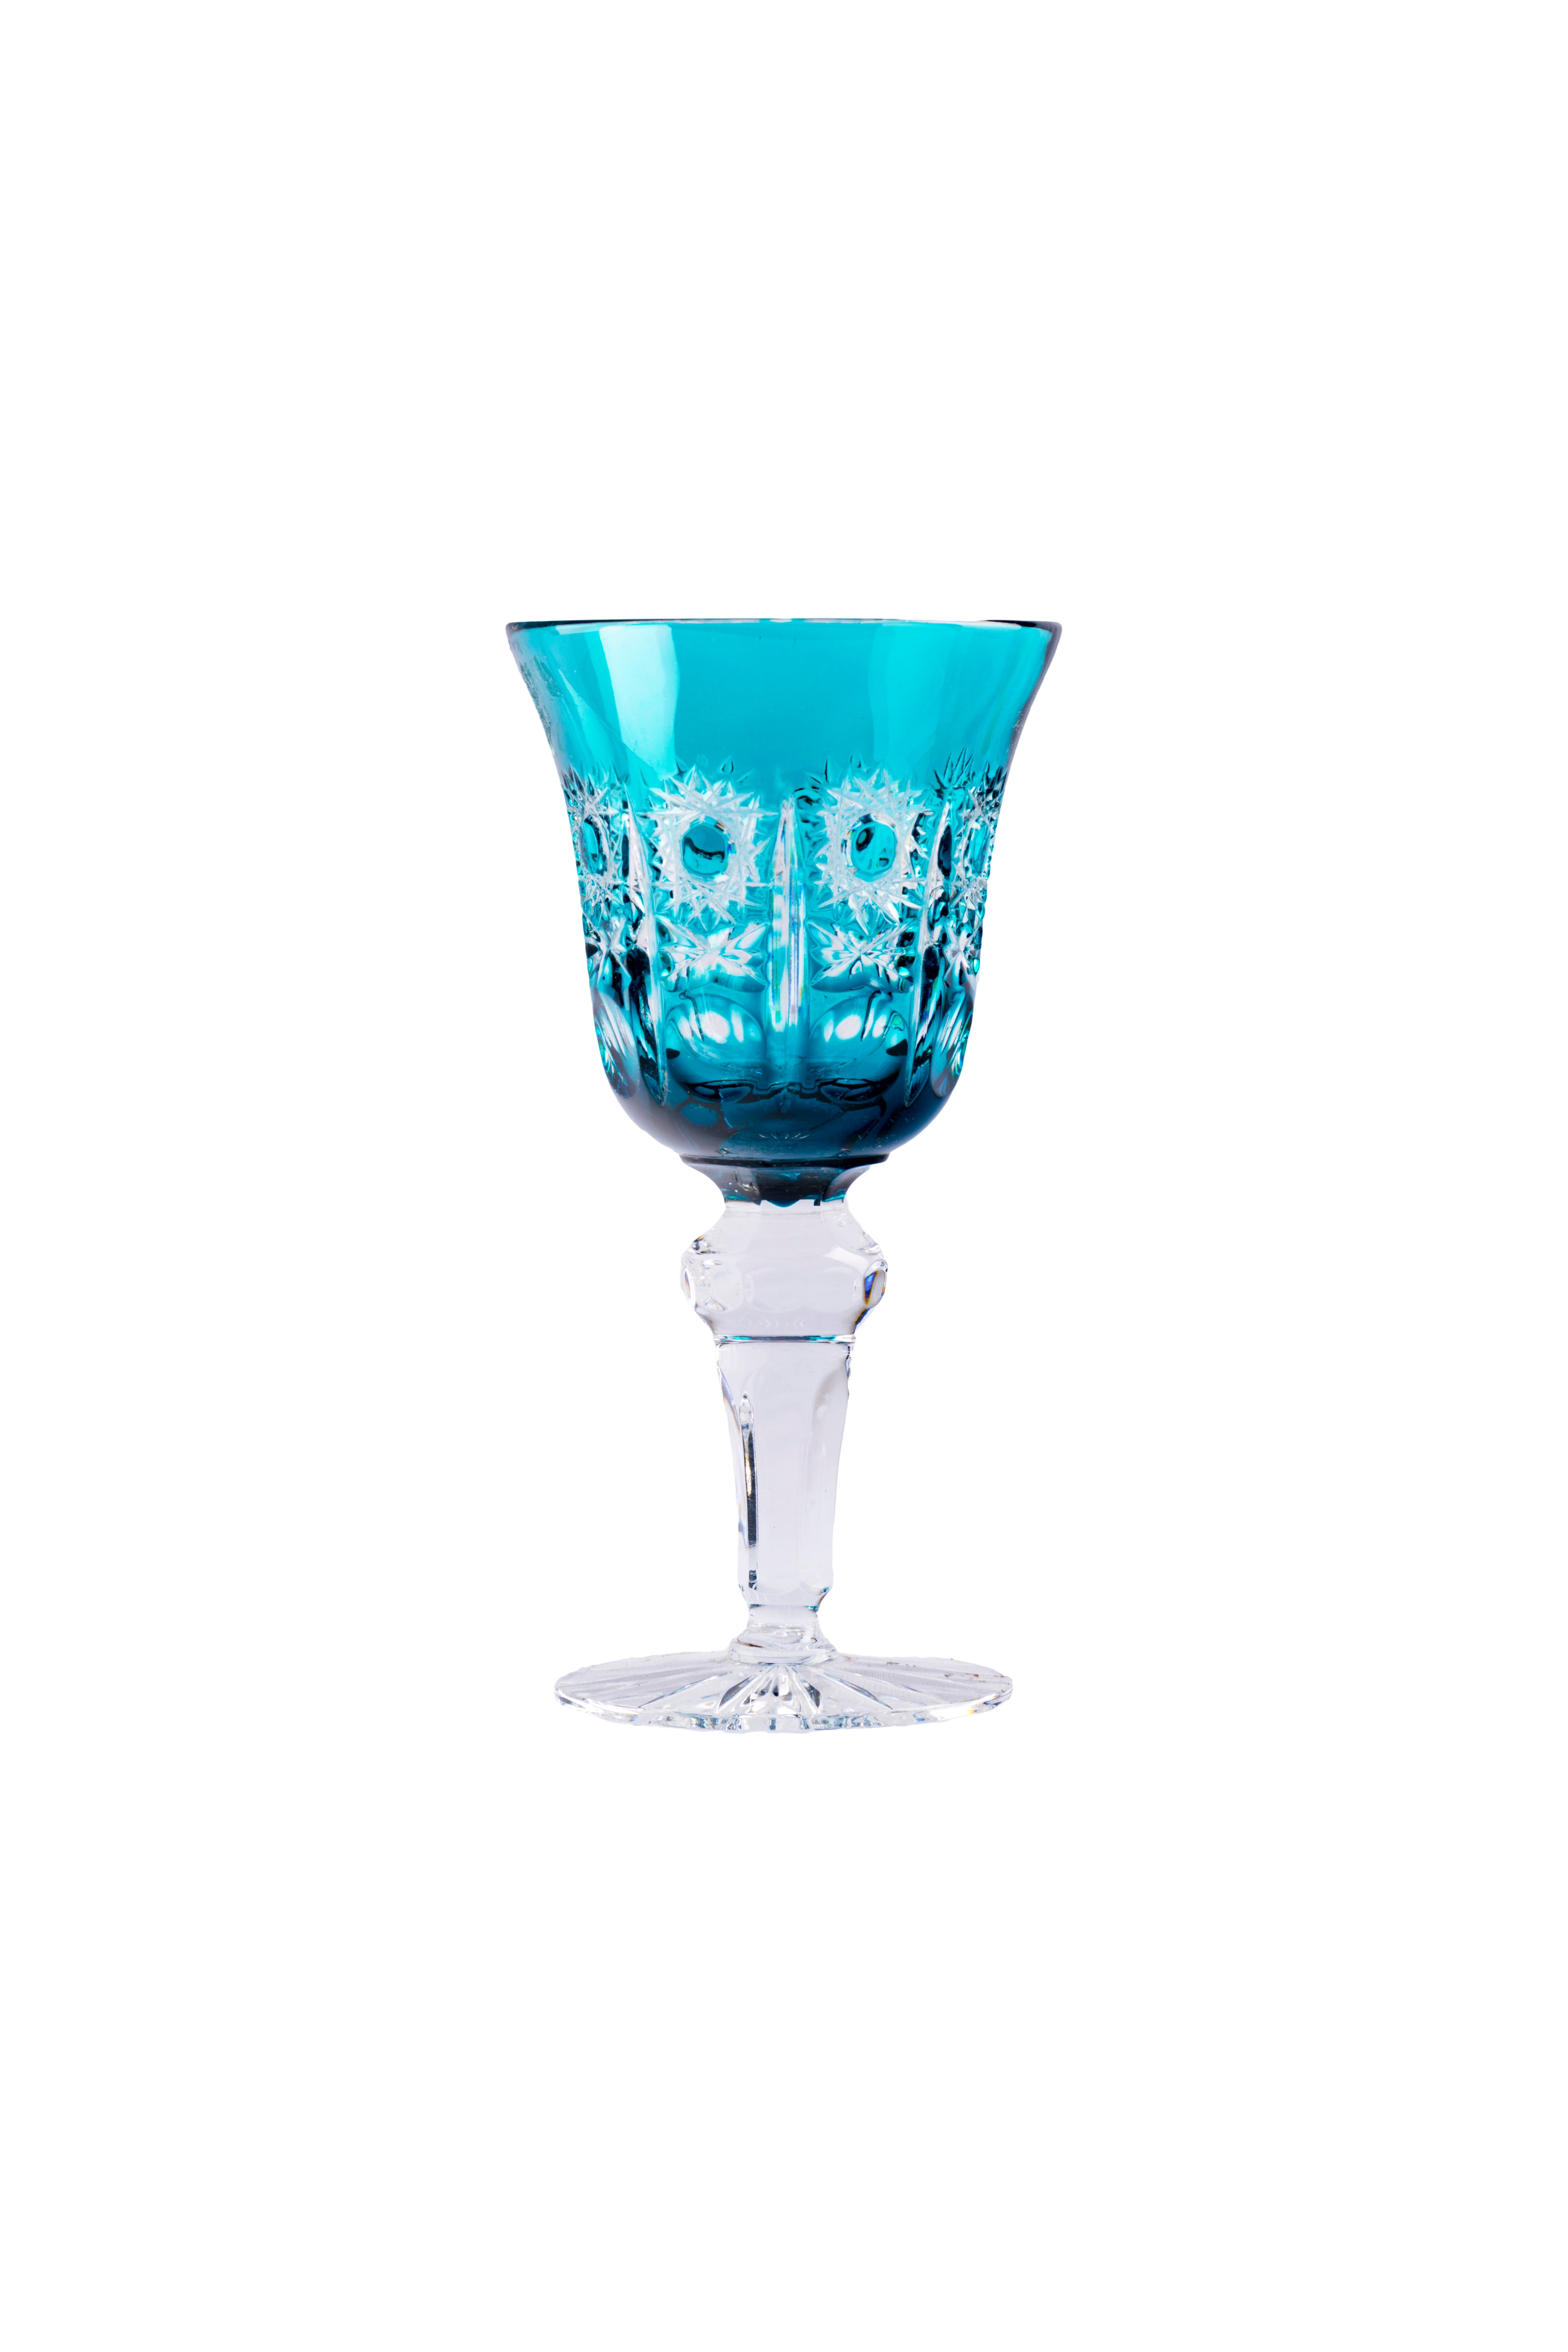 CAESAR CRYSTAL BOHEMIAE - Aqua Blue Cut Glass - Cocktail Glass with a Splash of Sophistication.